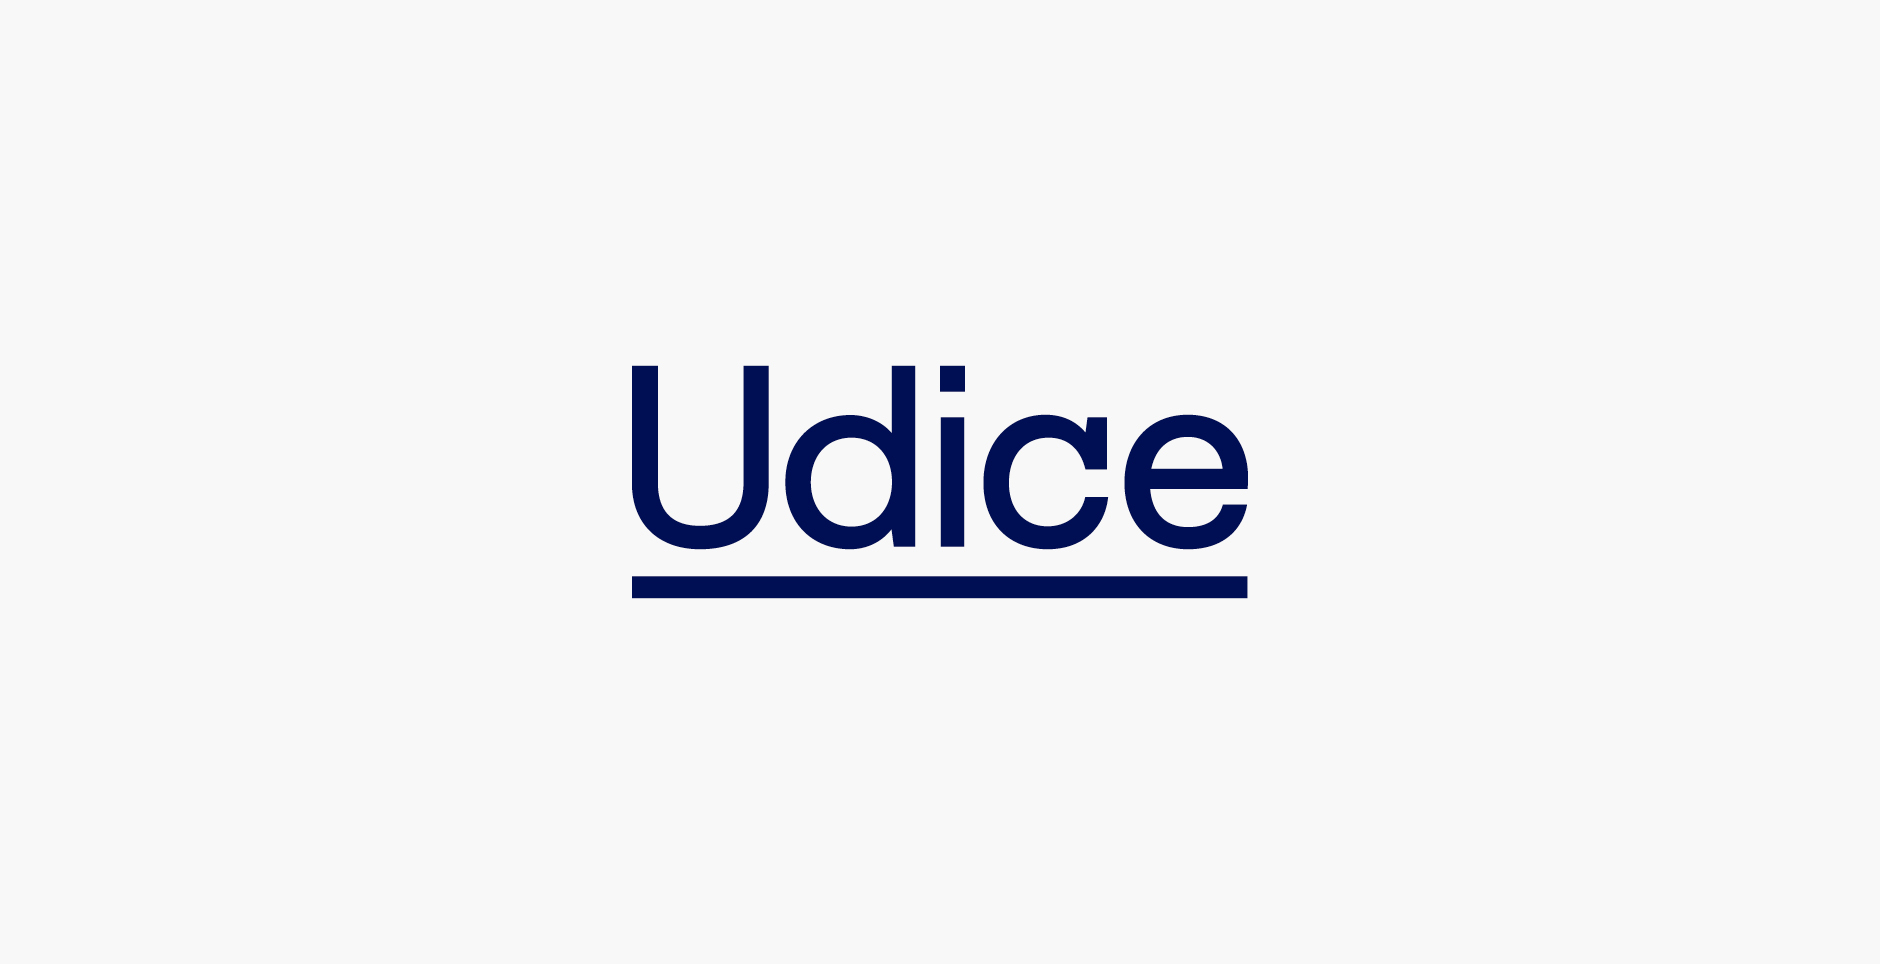 udice_case-study_20210113_0